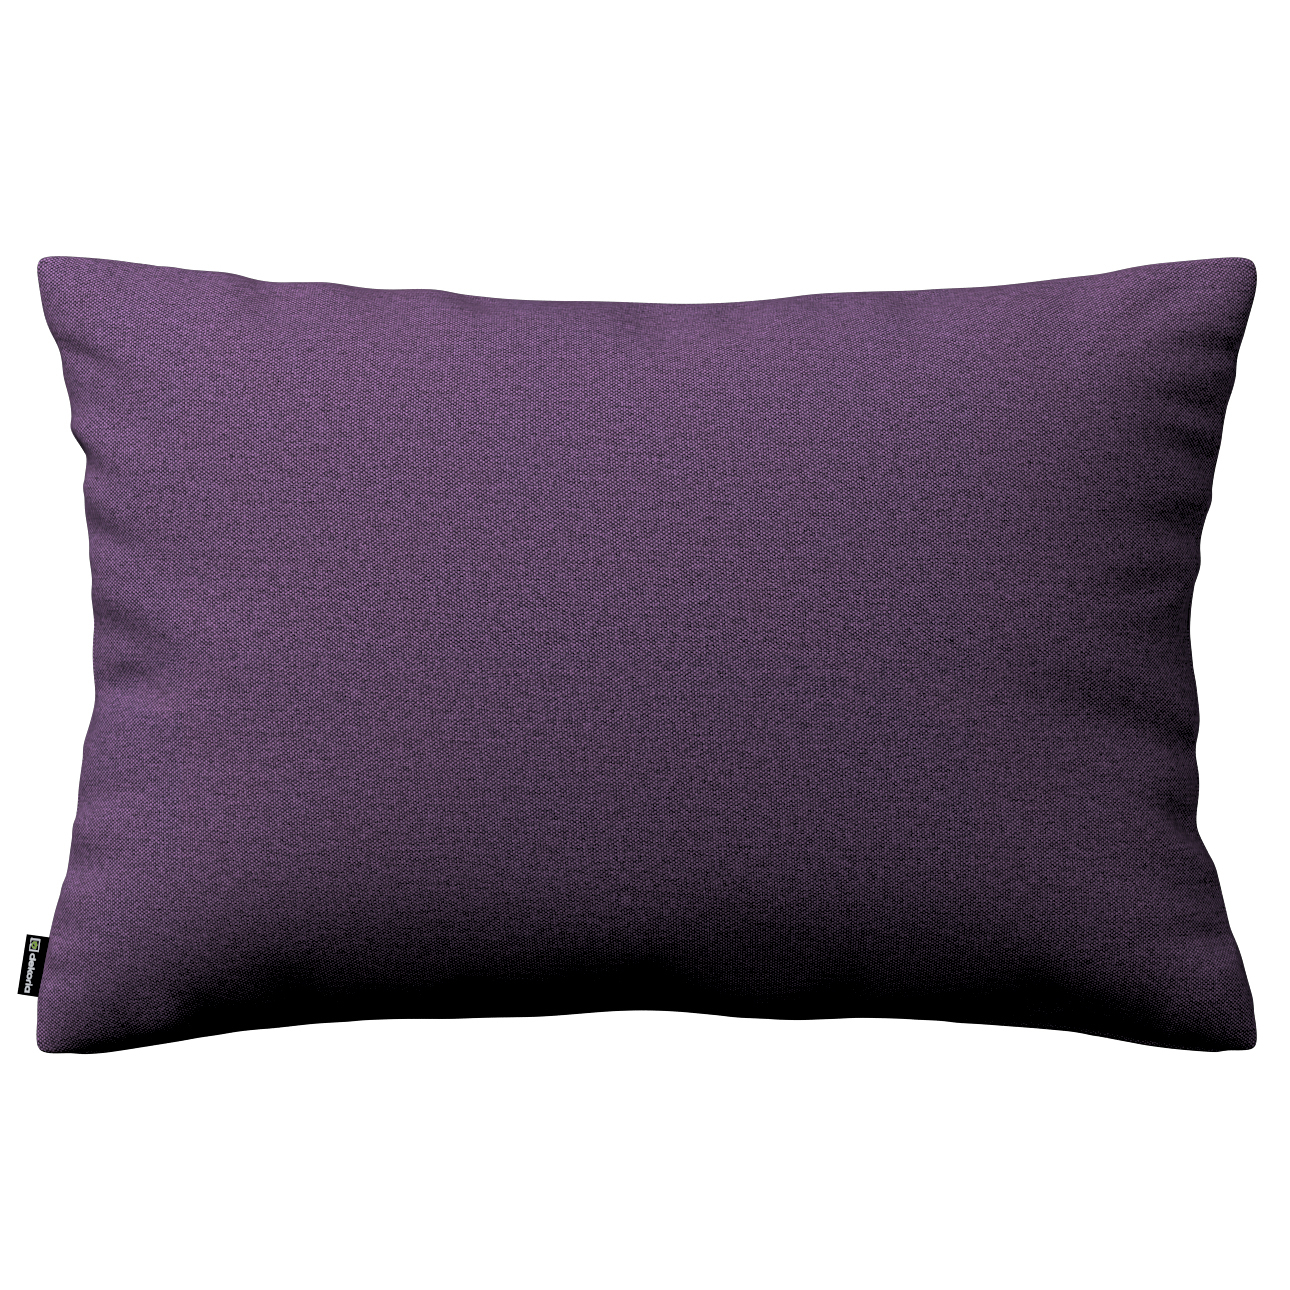 Kissenhülle Kinga rechteckig, violett, 60 x 40 cm, Etna (161-27) günstig online kaufen